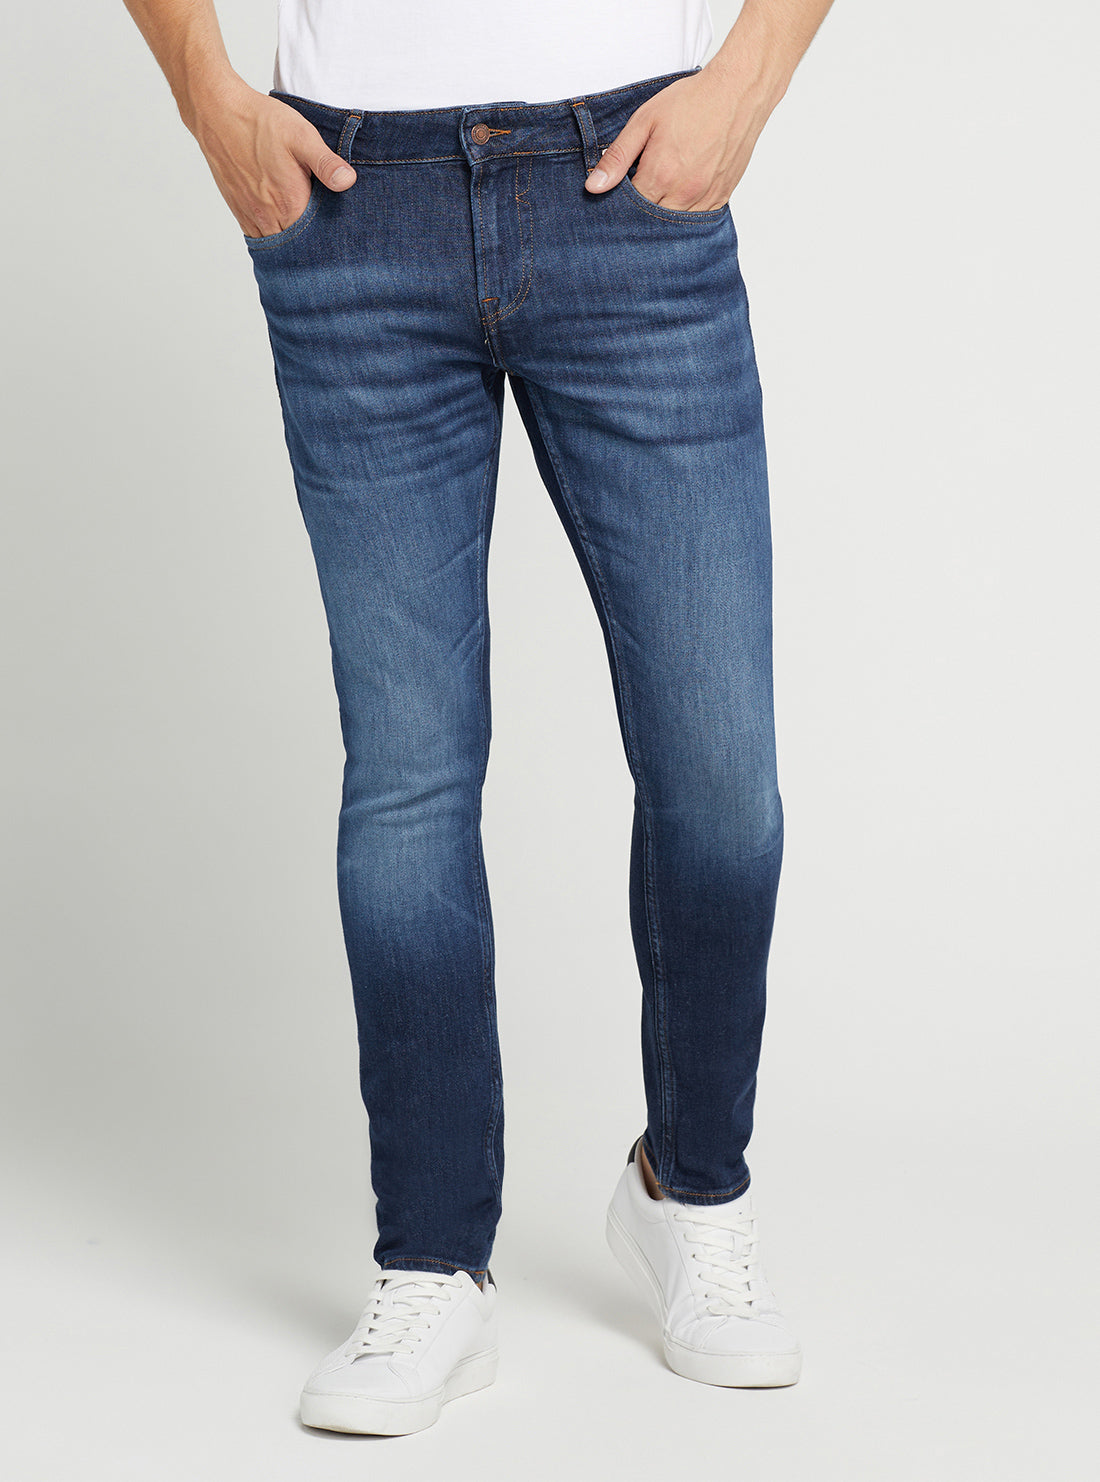 Shop Men's Skinny Jeans | GUESS